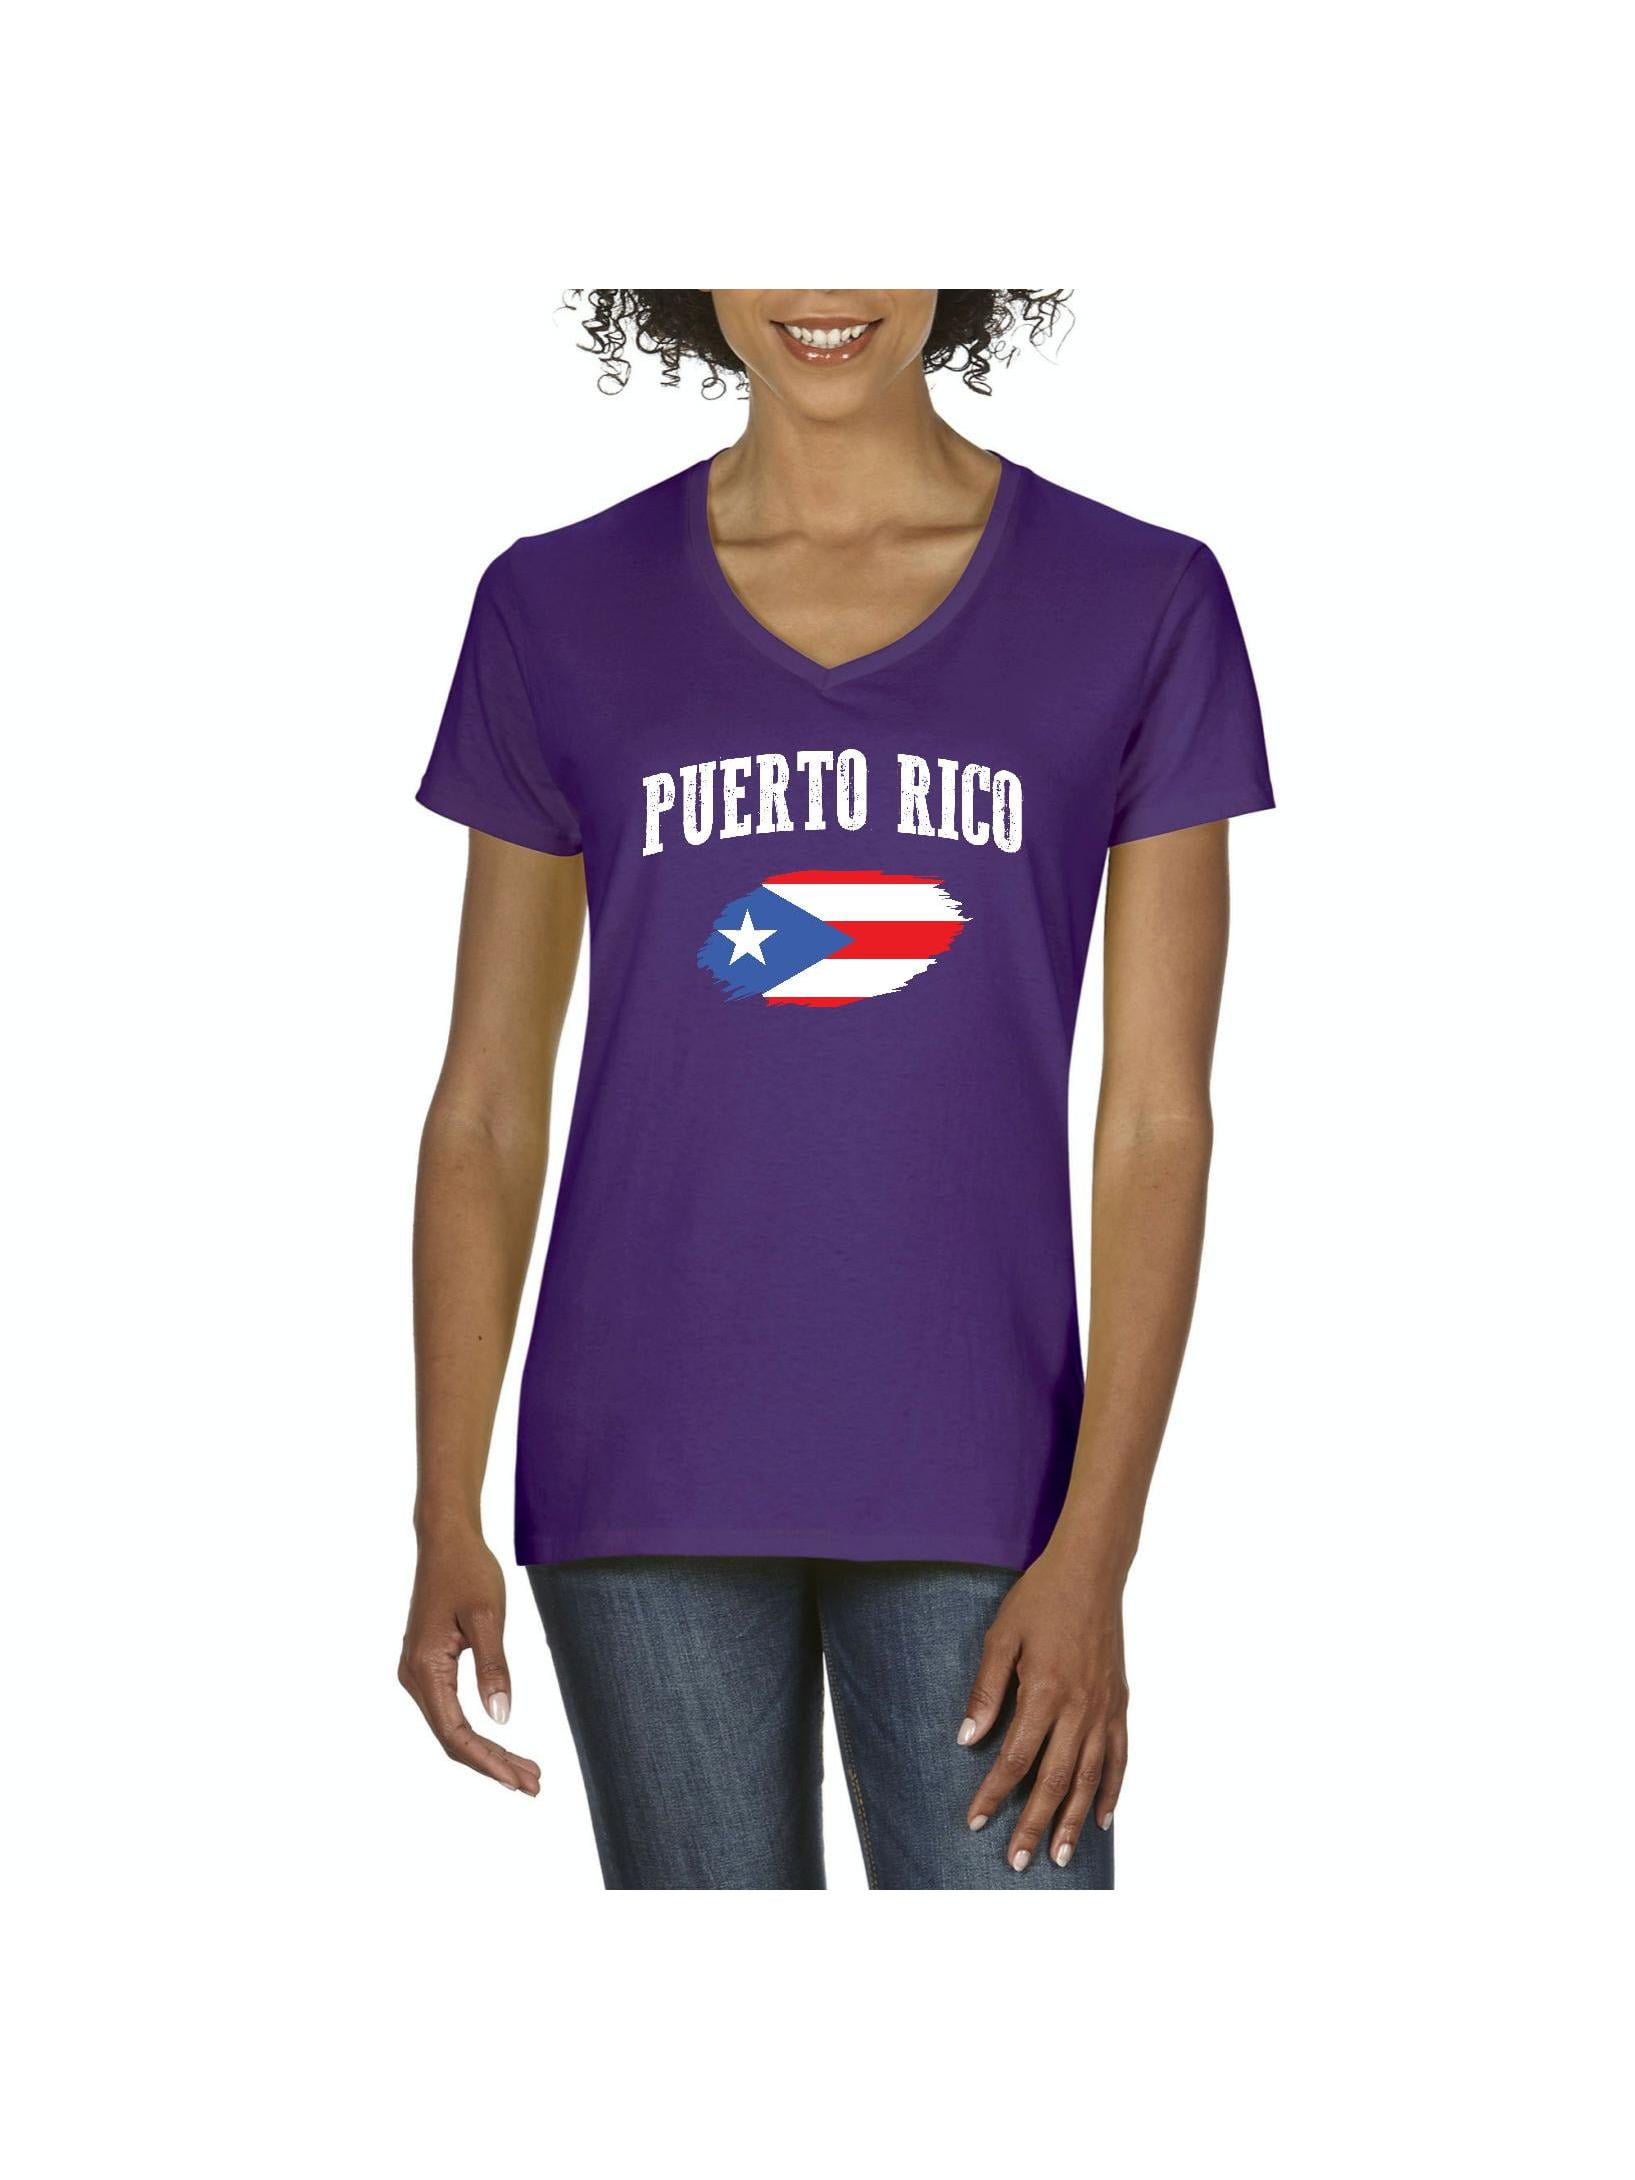 Puerto Rico Strong Toddler Girls T Shirt Kids Cotton Short Sleeve Ruffle Tee